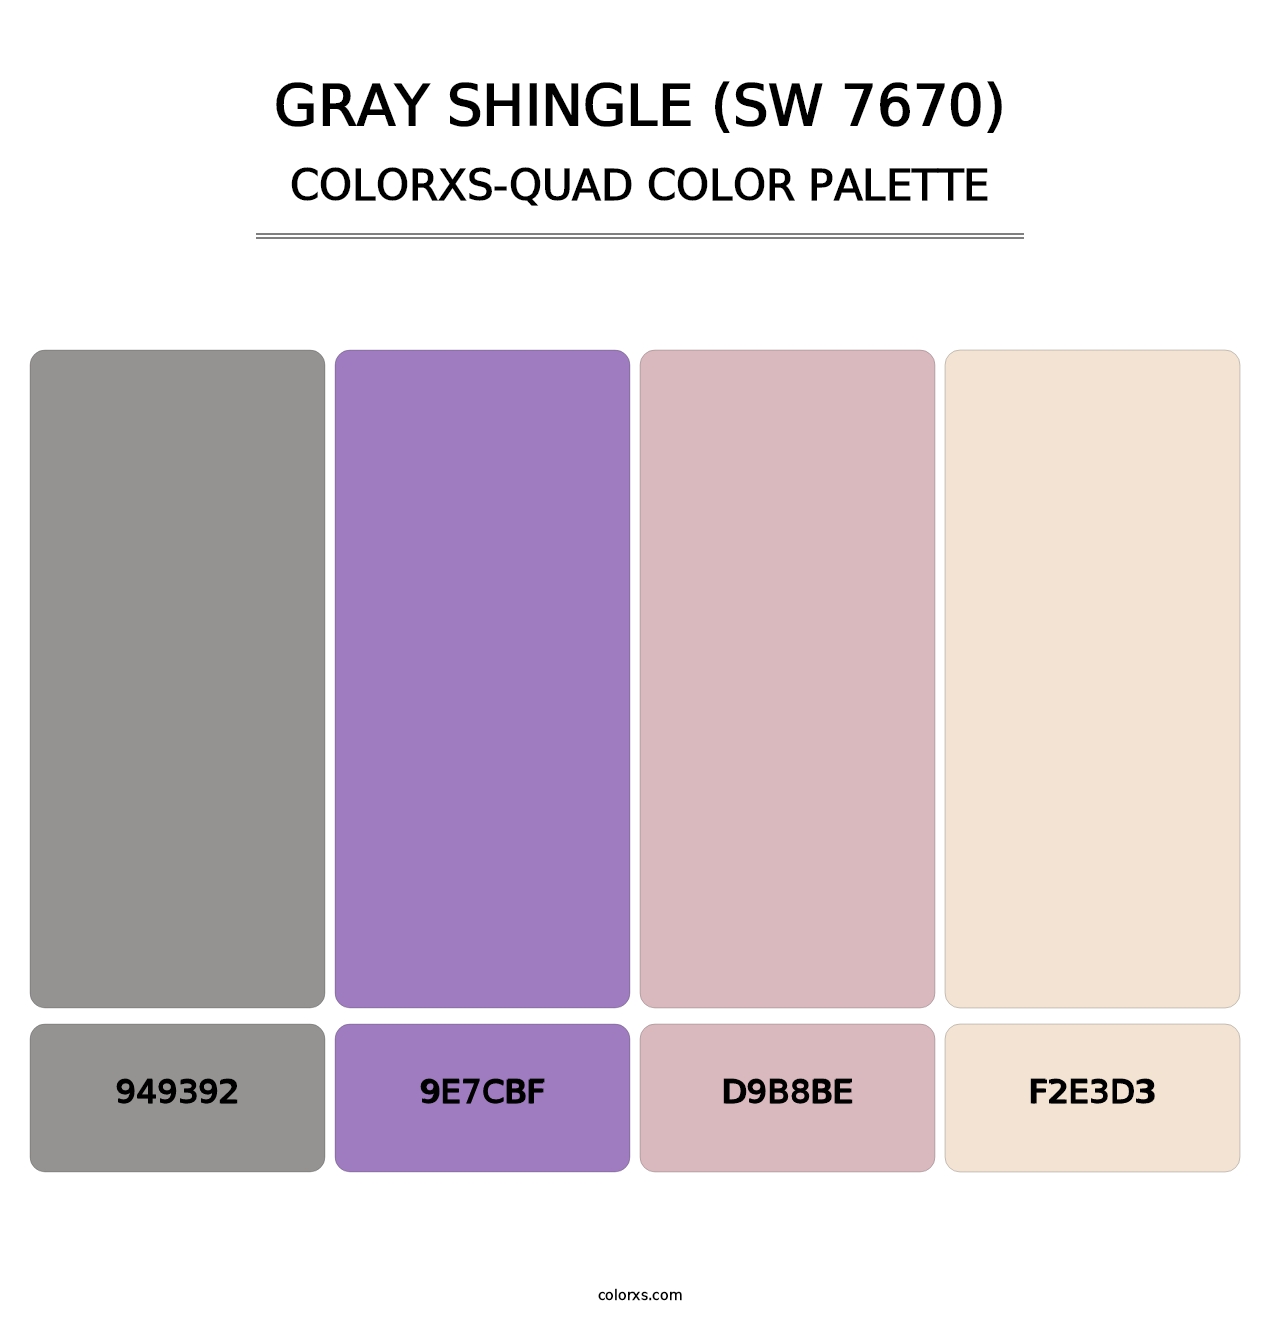 Gray Shingle (SW 7670) - Colorxs Quad Palette